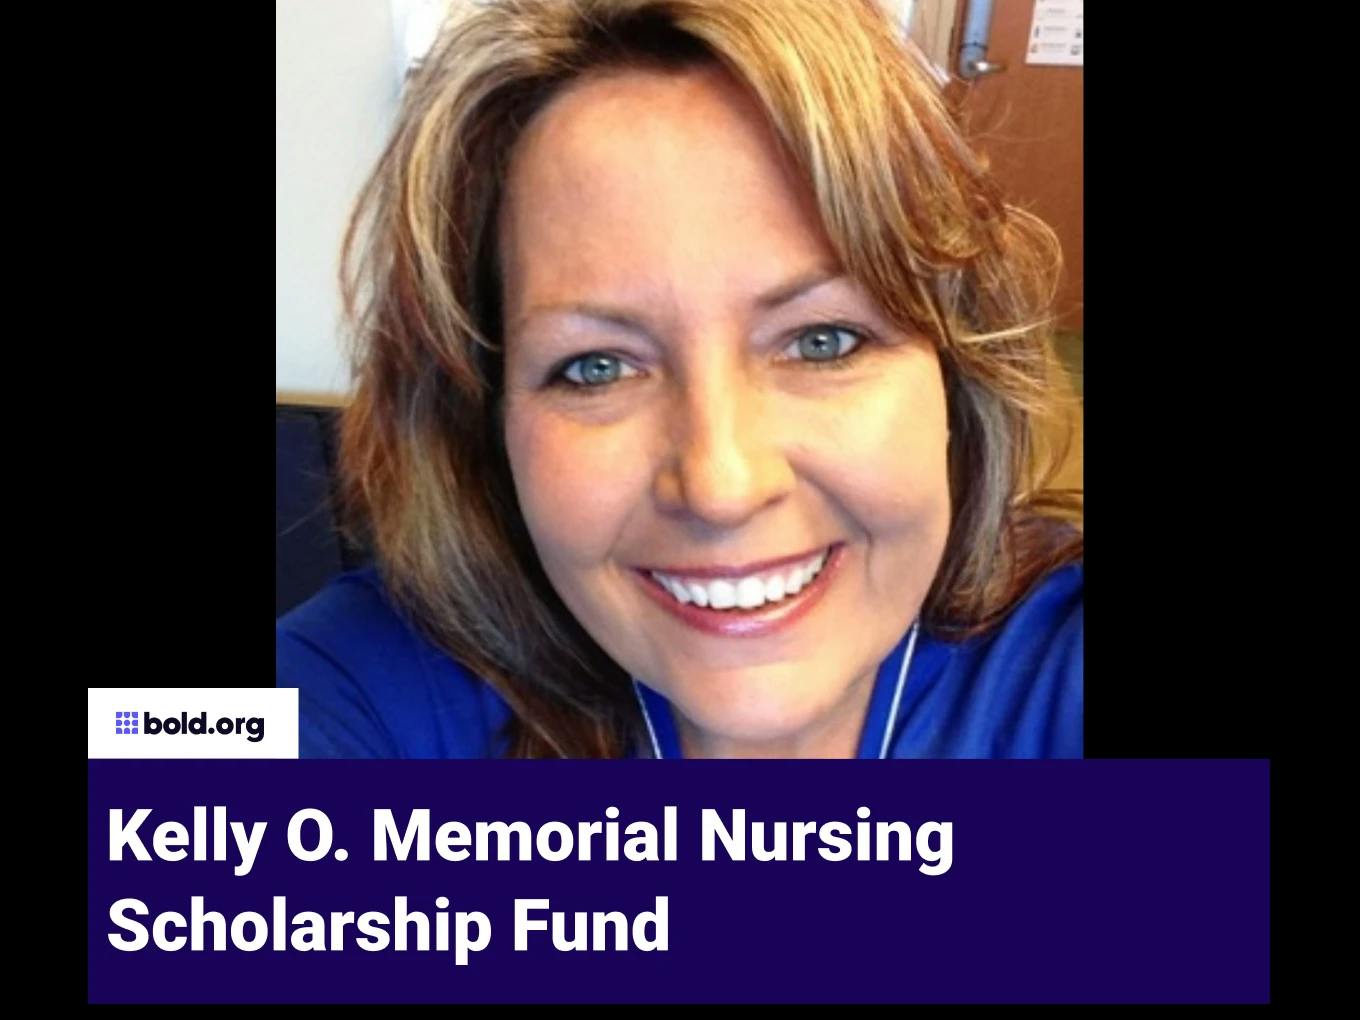 Kelly O. Memorial Nursing Scholarship Fund